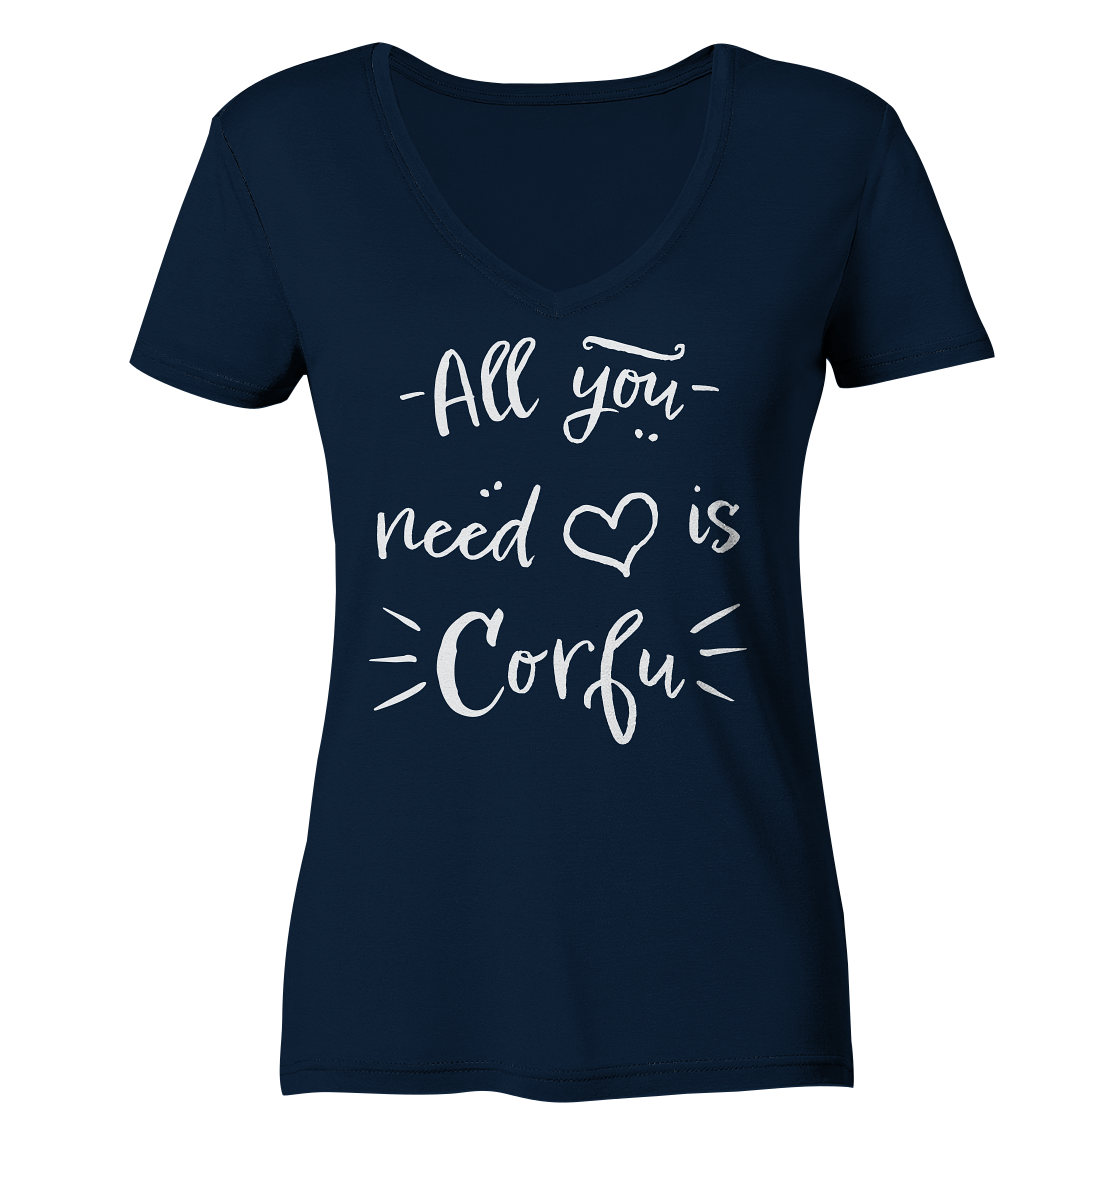 All you need is Corfu - Ladies Organic V-Neck Shirt